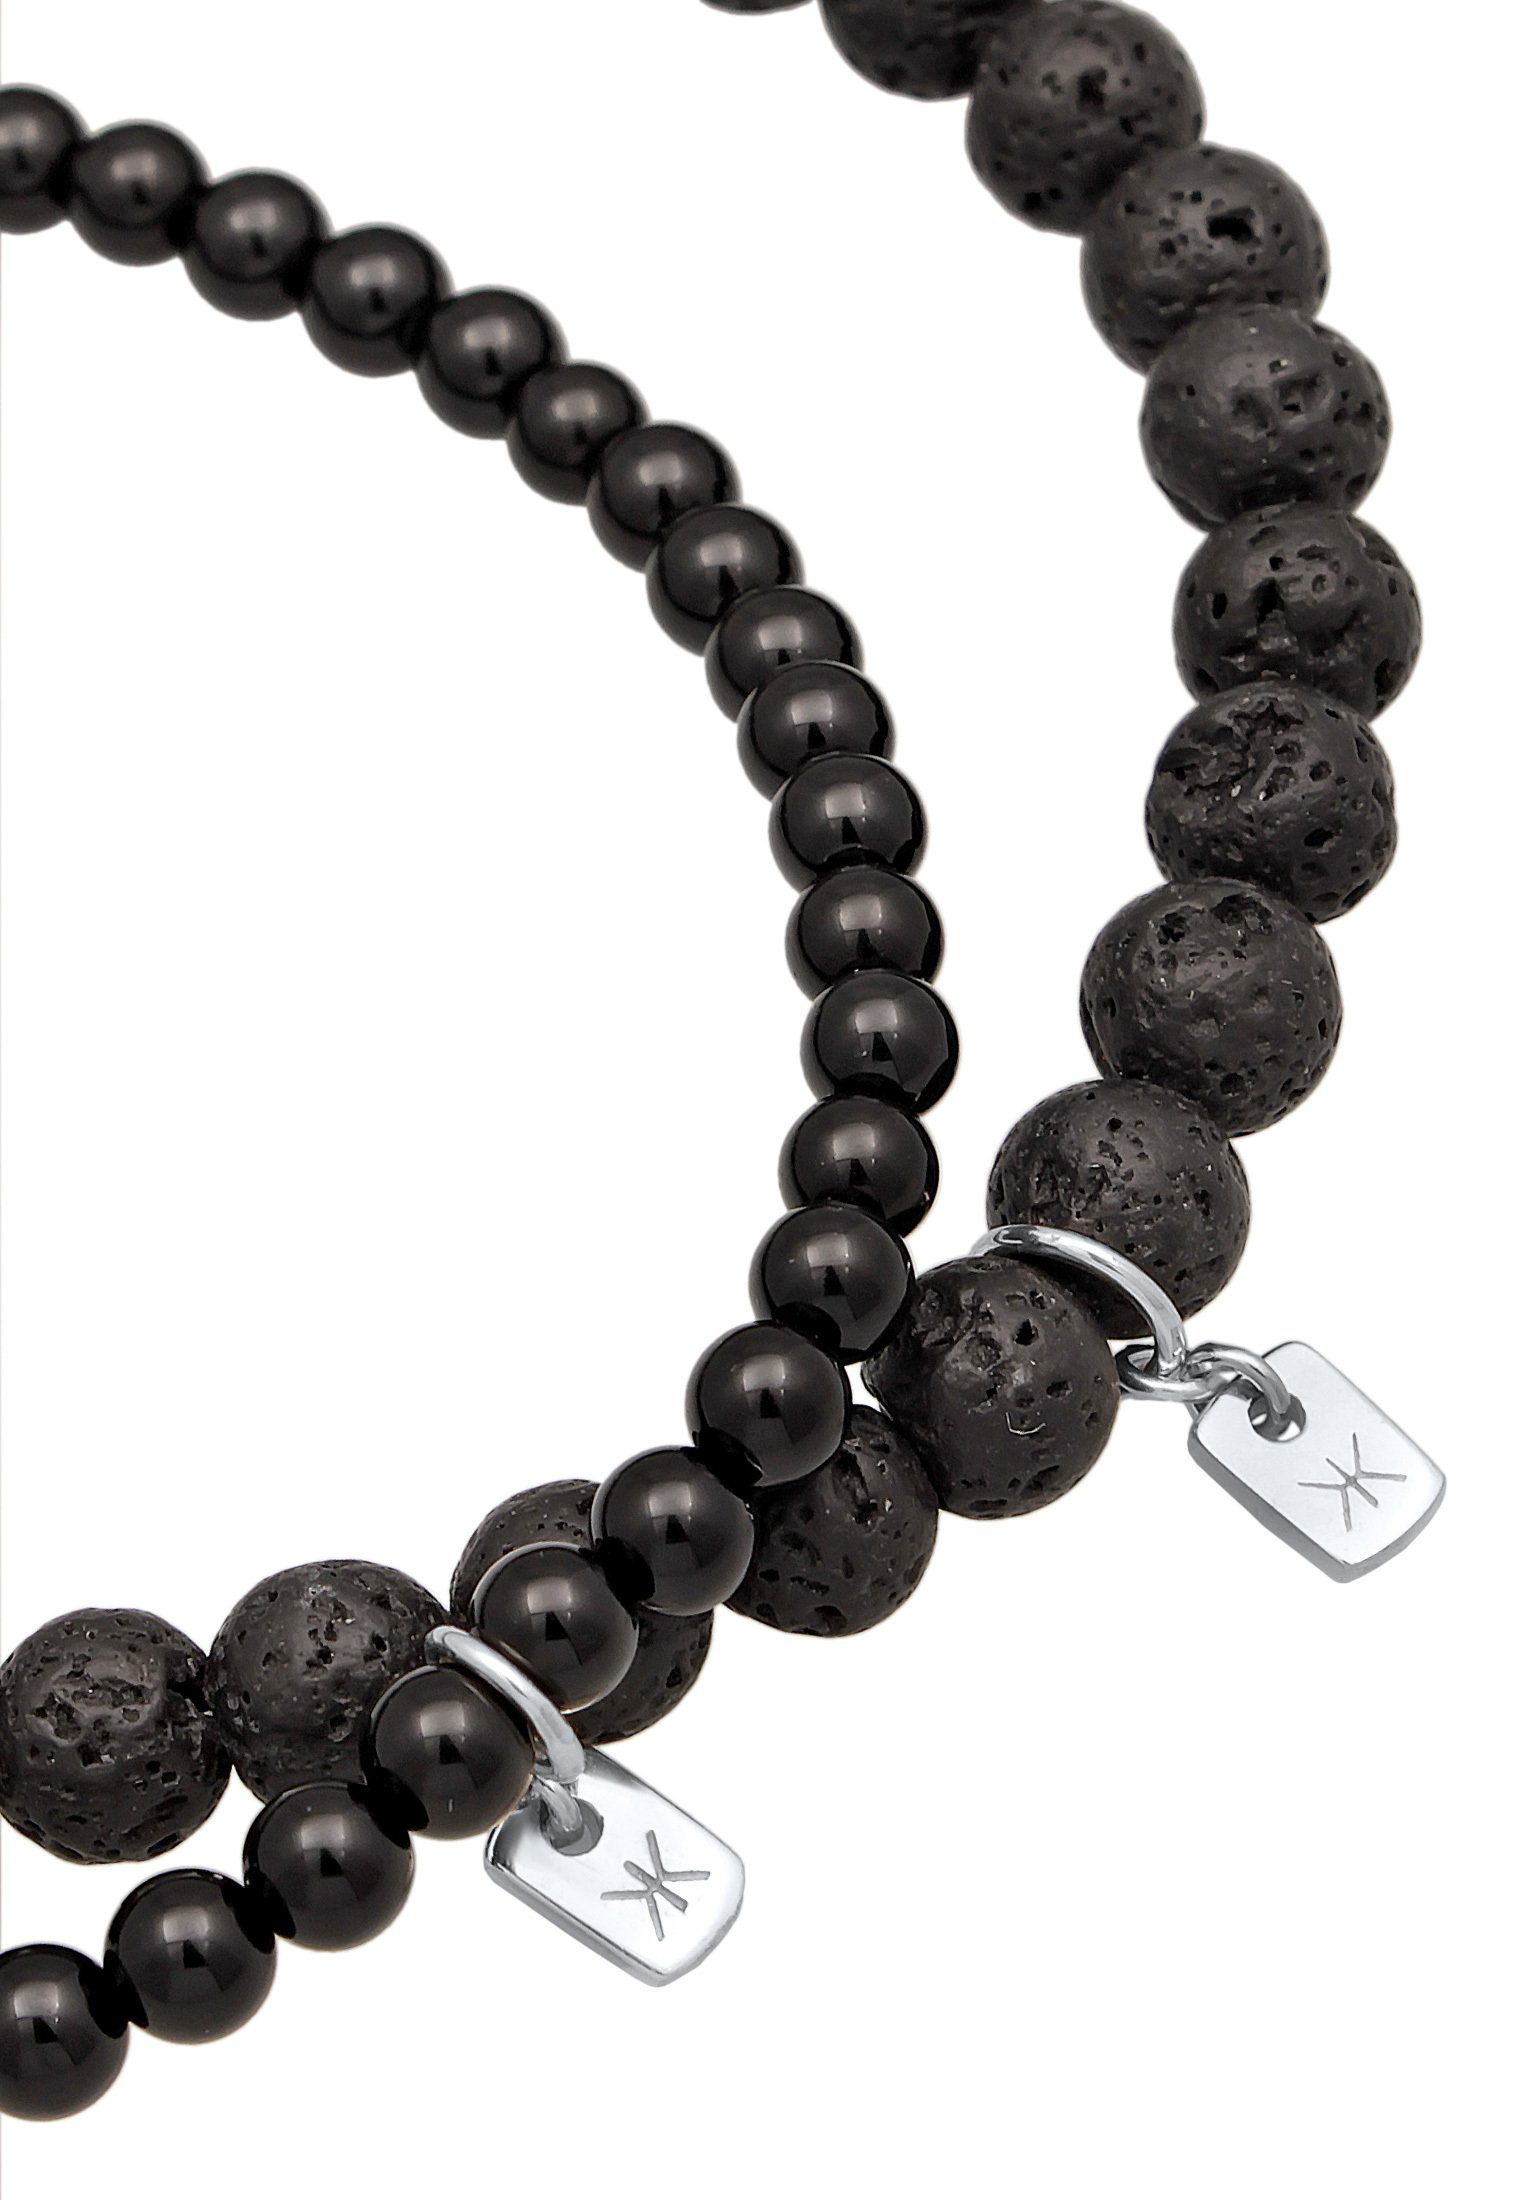 Kuzzoi Bead-Armband-Set Lava Onyx Set Silber, Bead Kugel 925 aus Edelstein Perlen